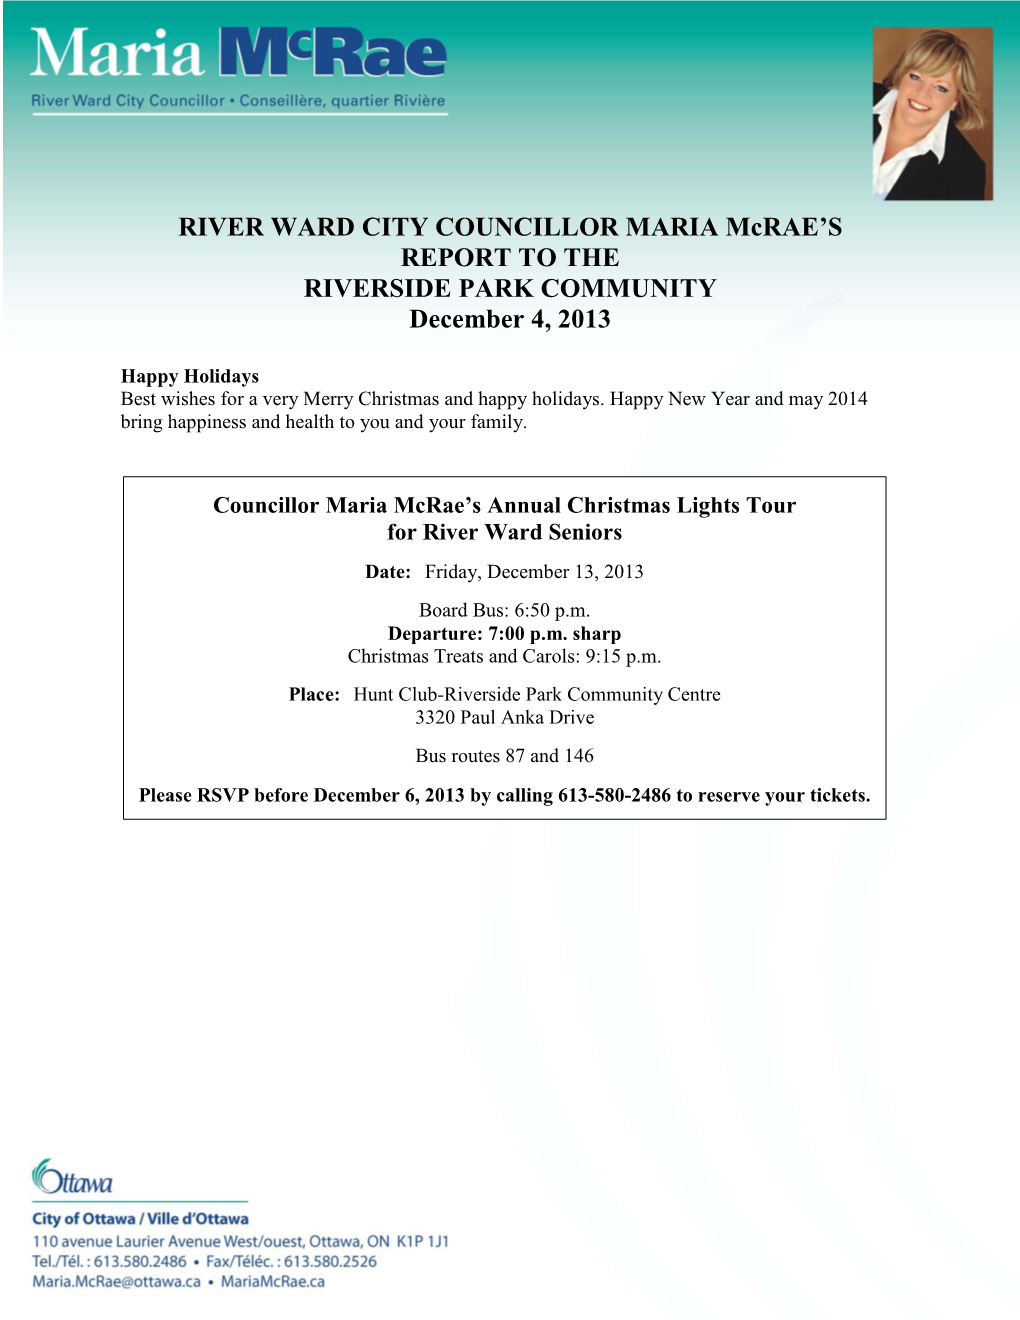 RIVER WARD CITY COUNCILLOR MARIA Mcrae's REPORT to THE